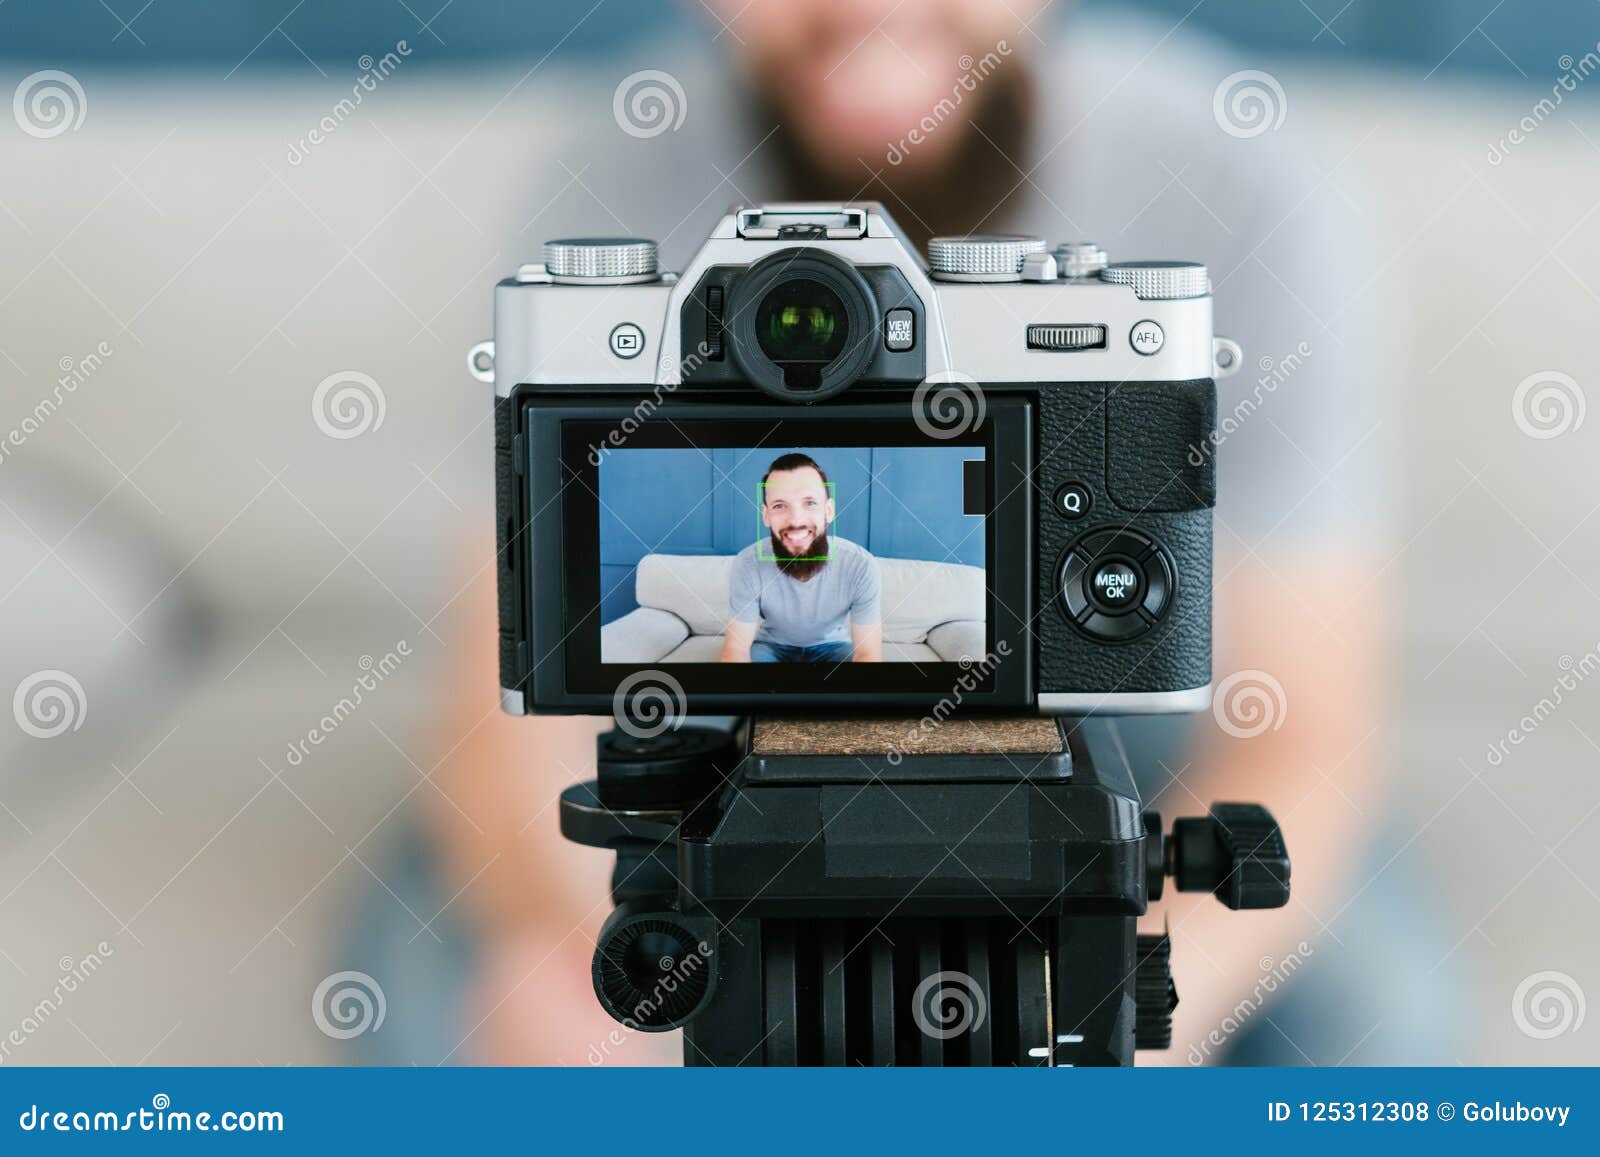 social media influencer man shoot video technology